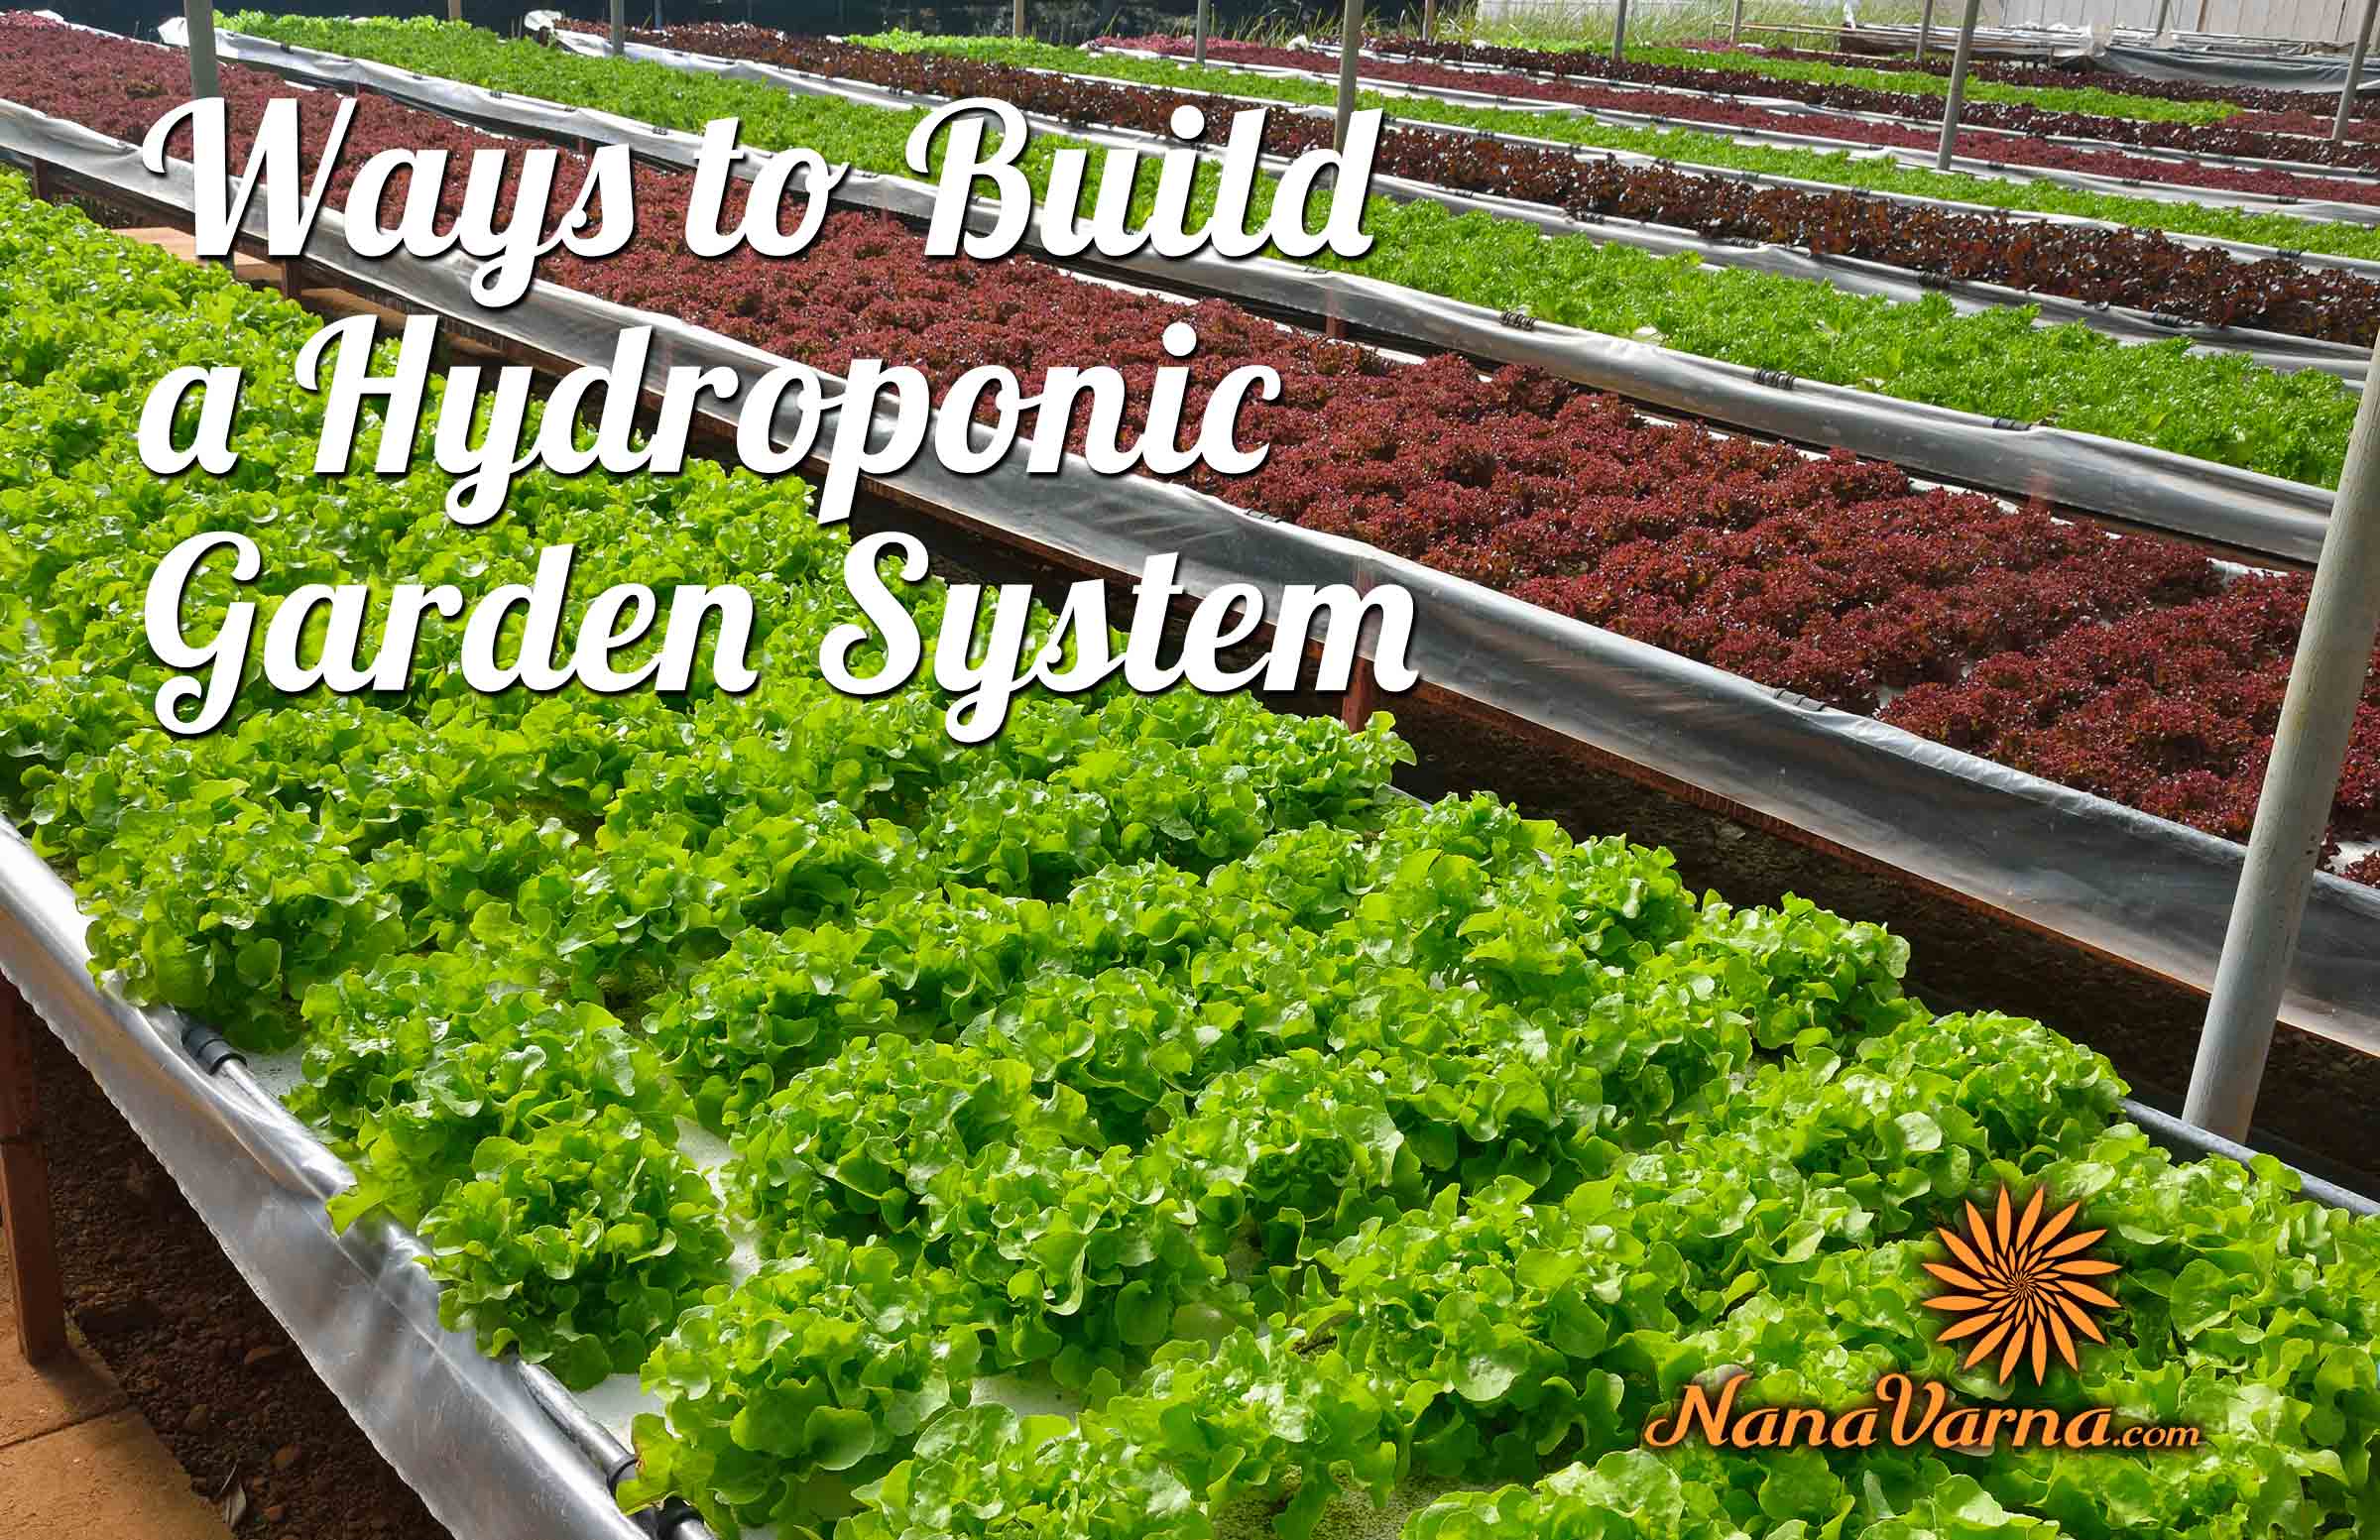 hydroponic garden system